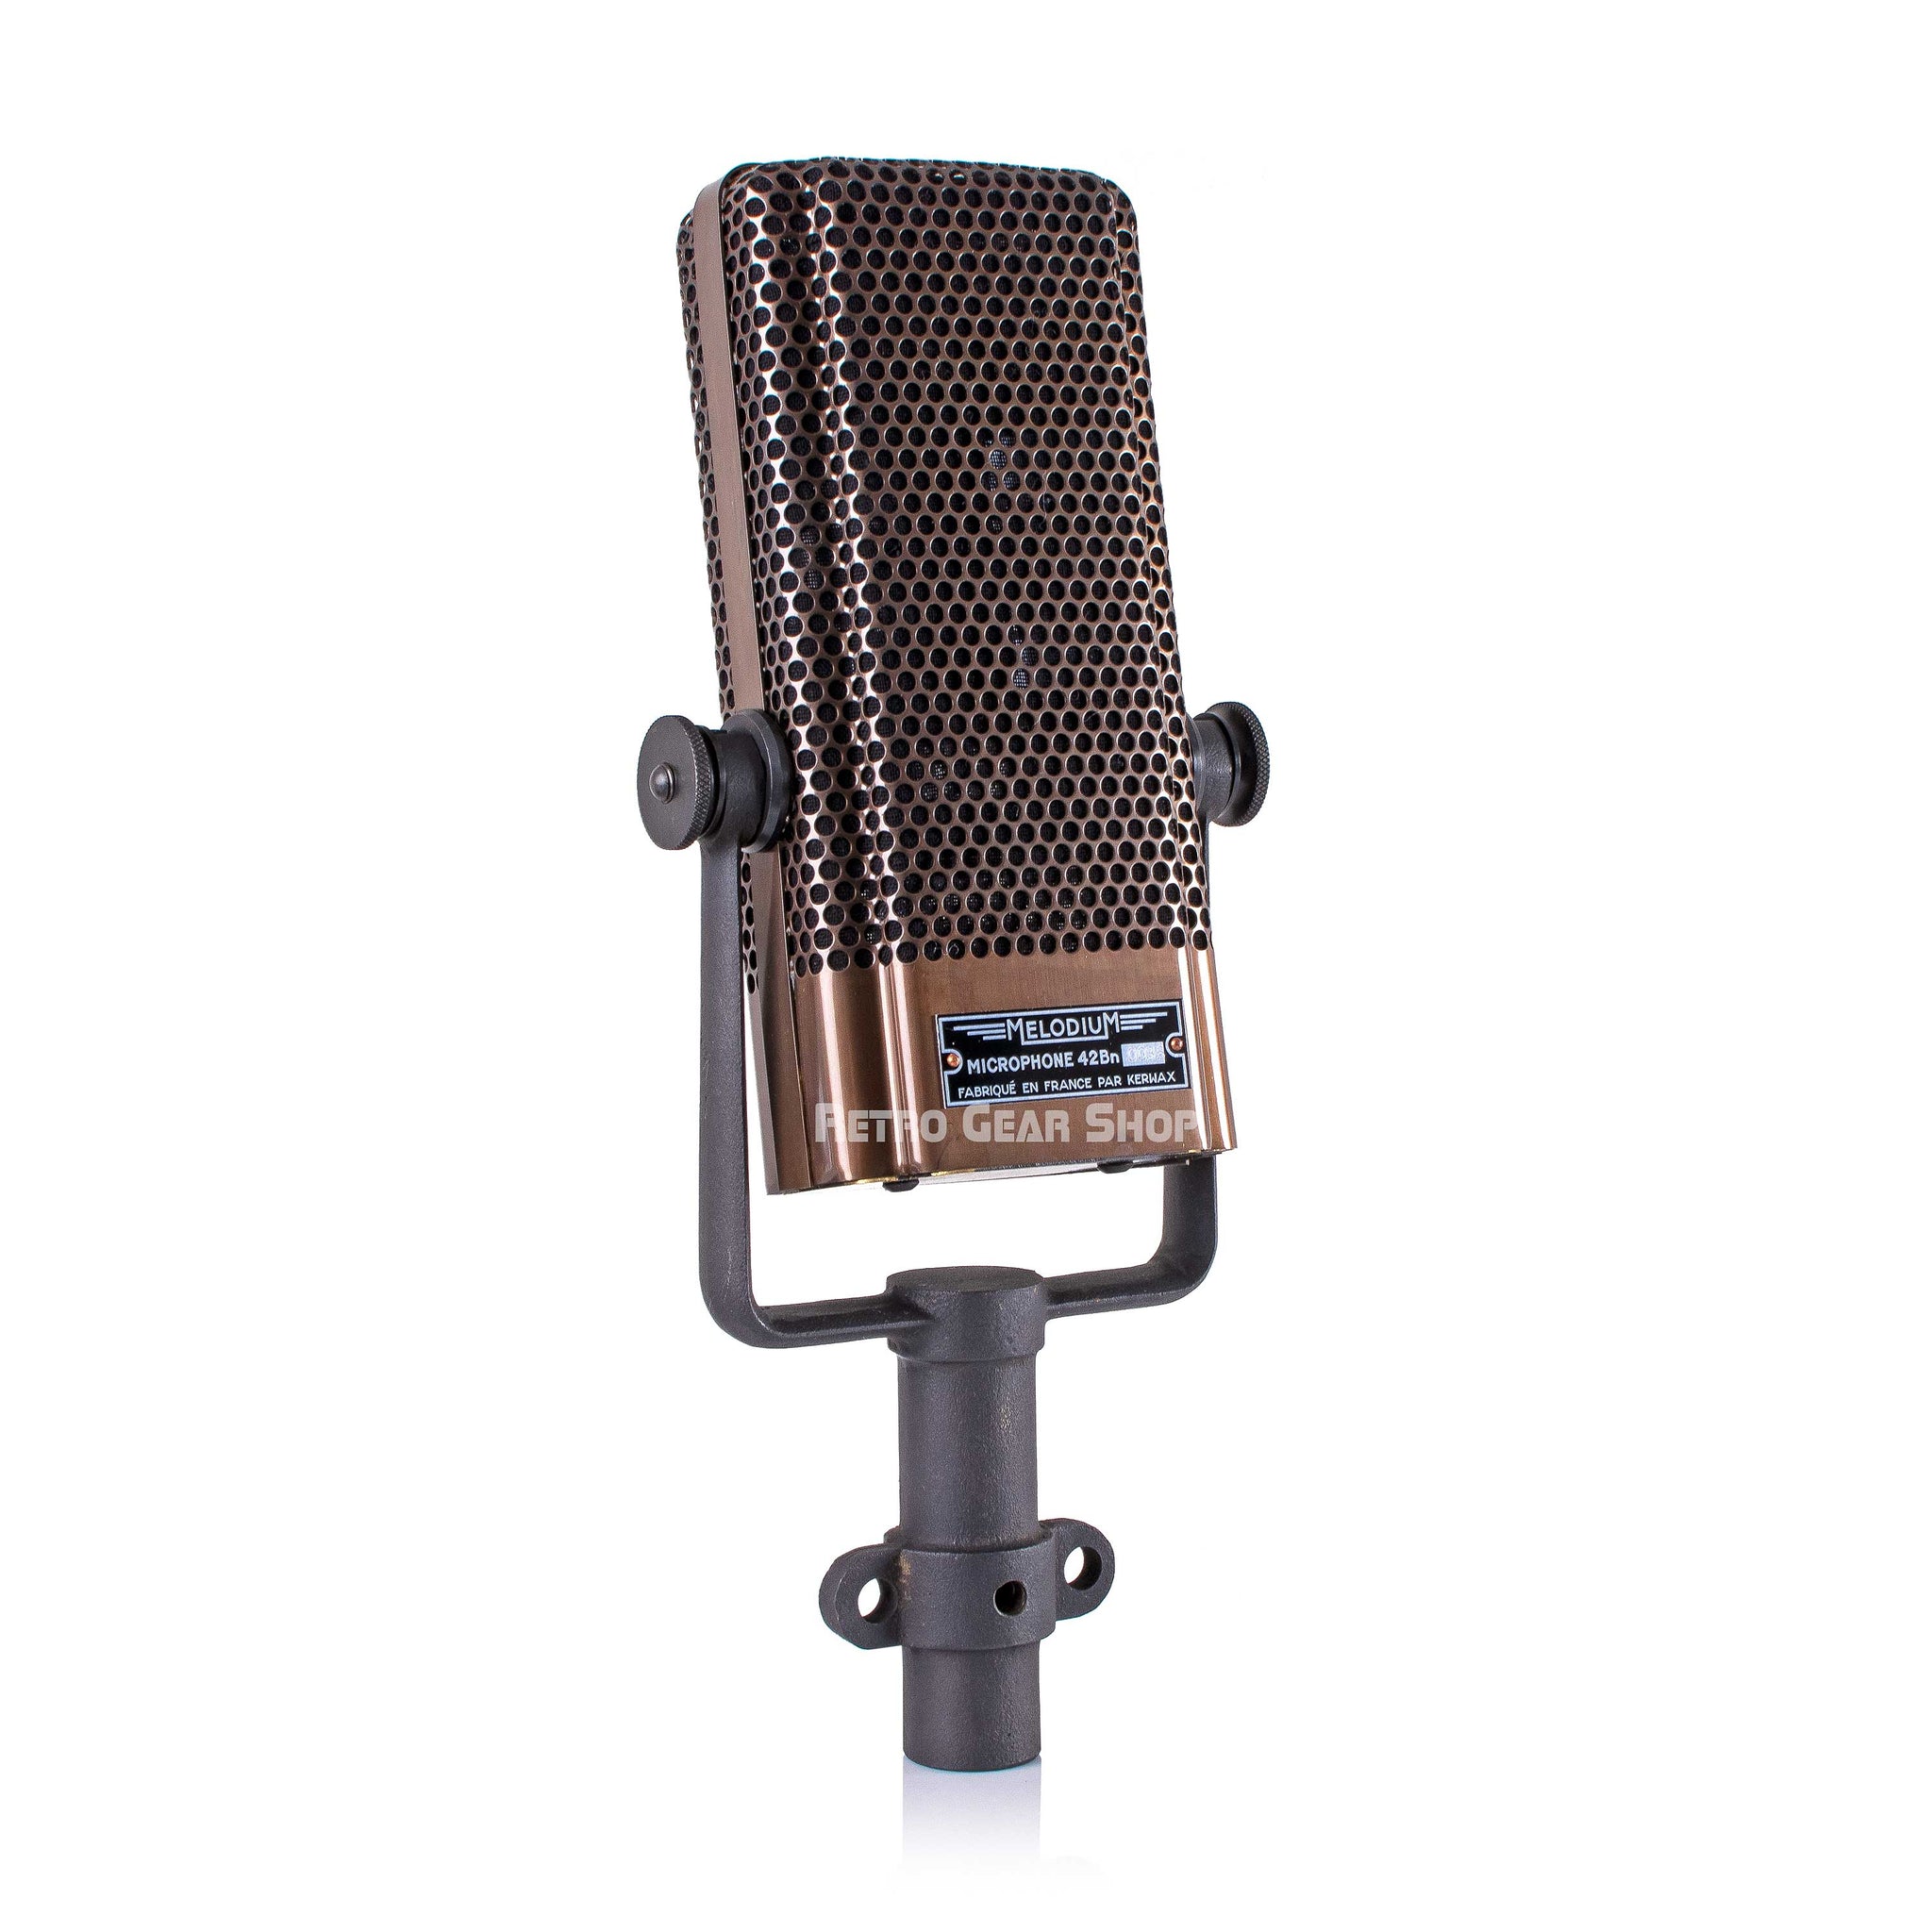 Melodium Kerwax 42Bn Ribbon Microphone Clone